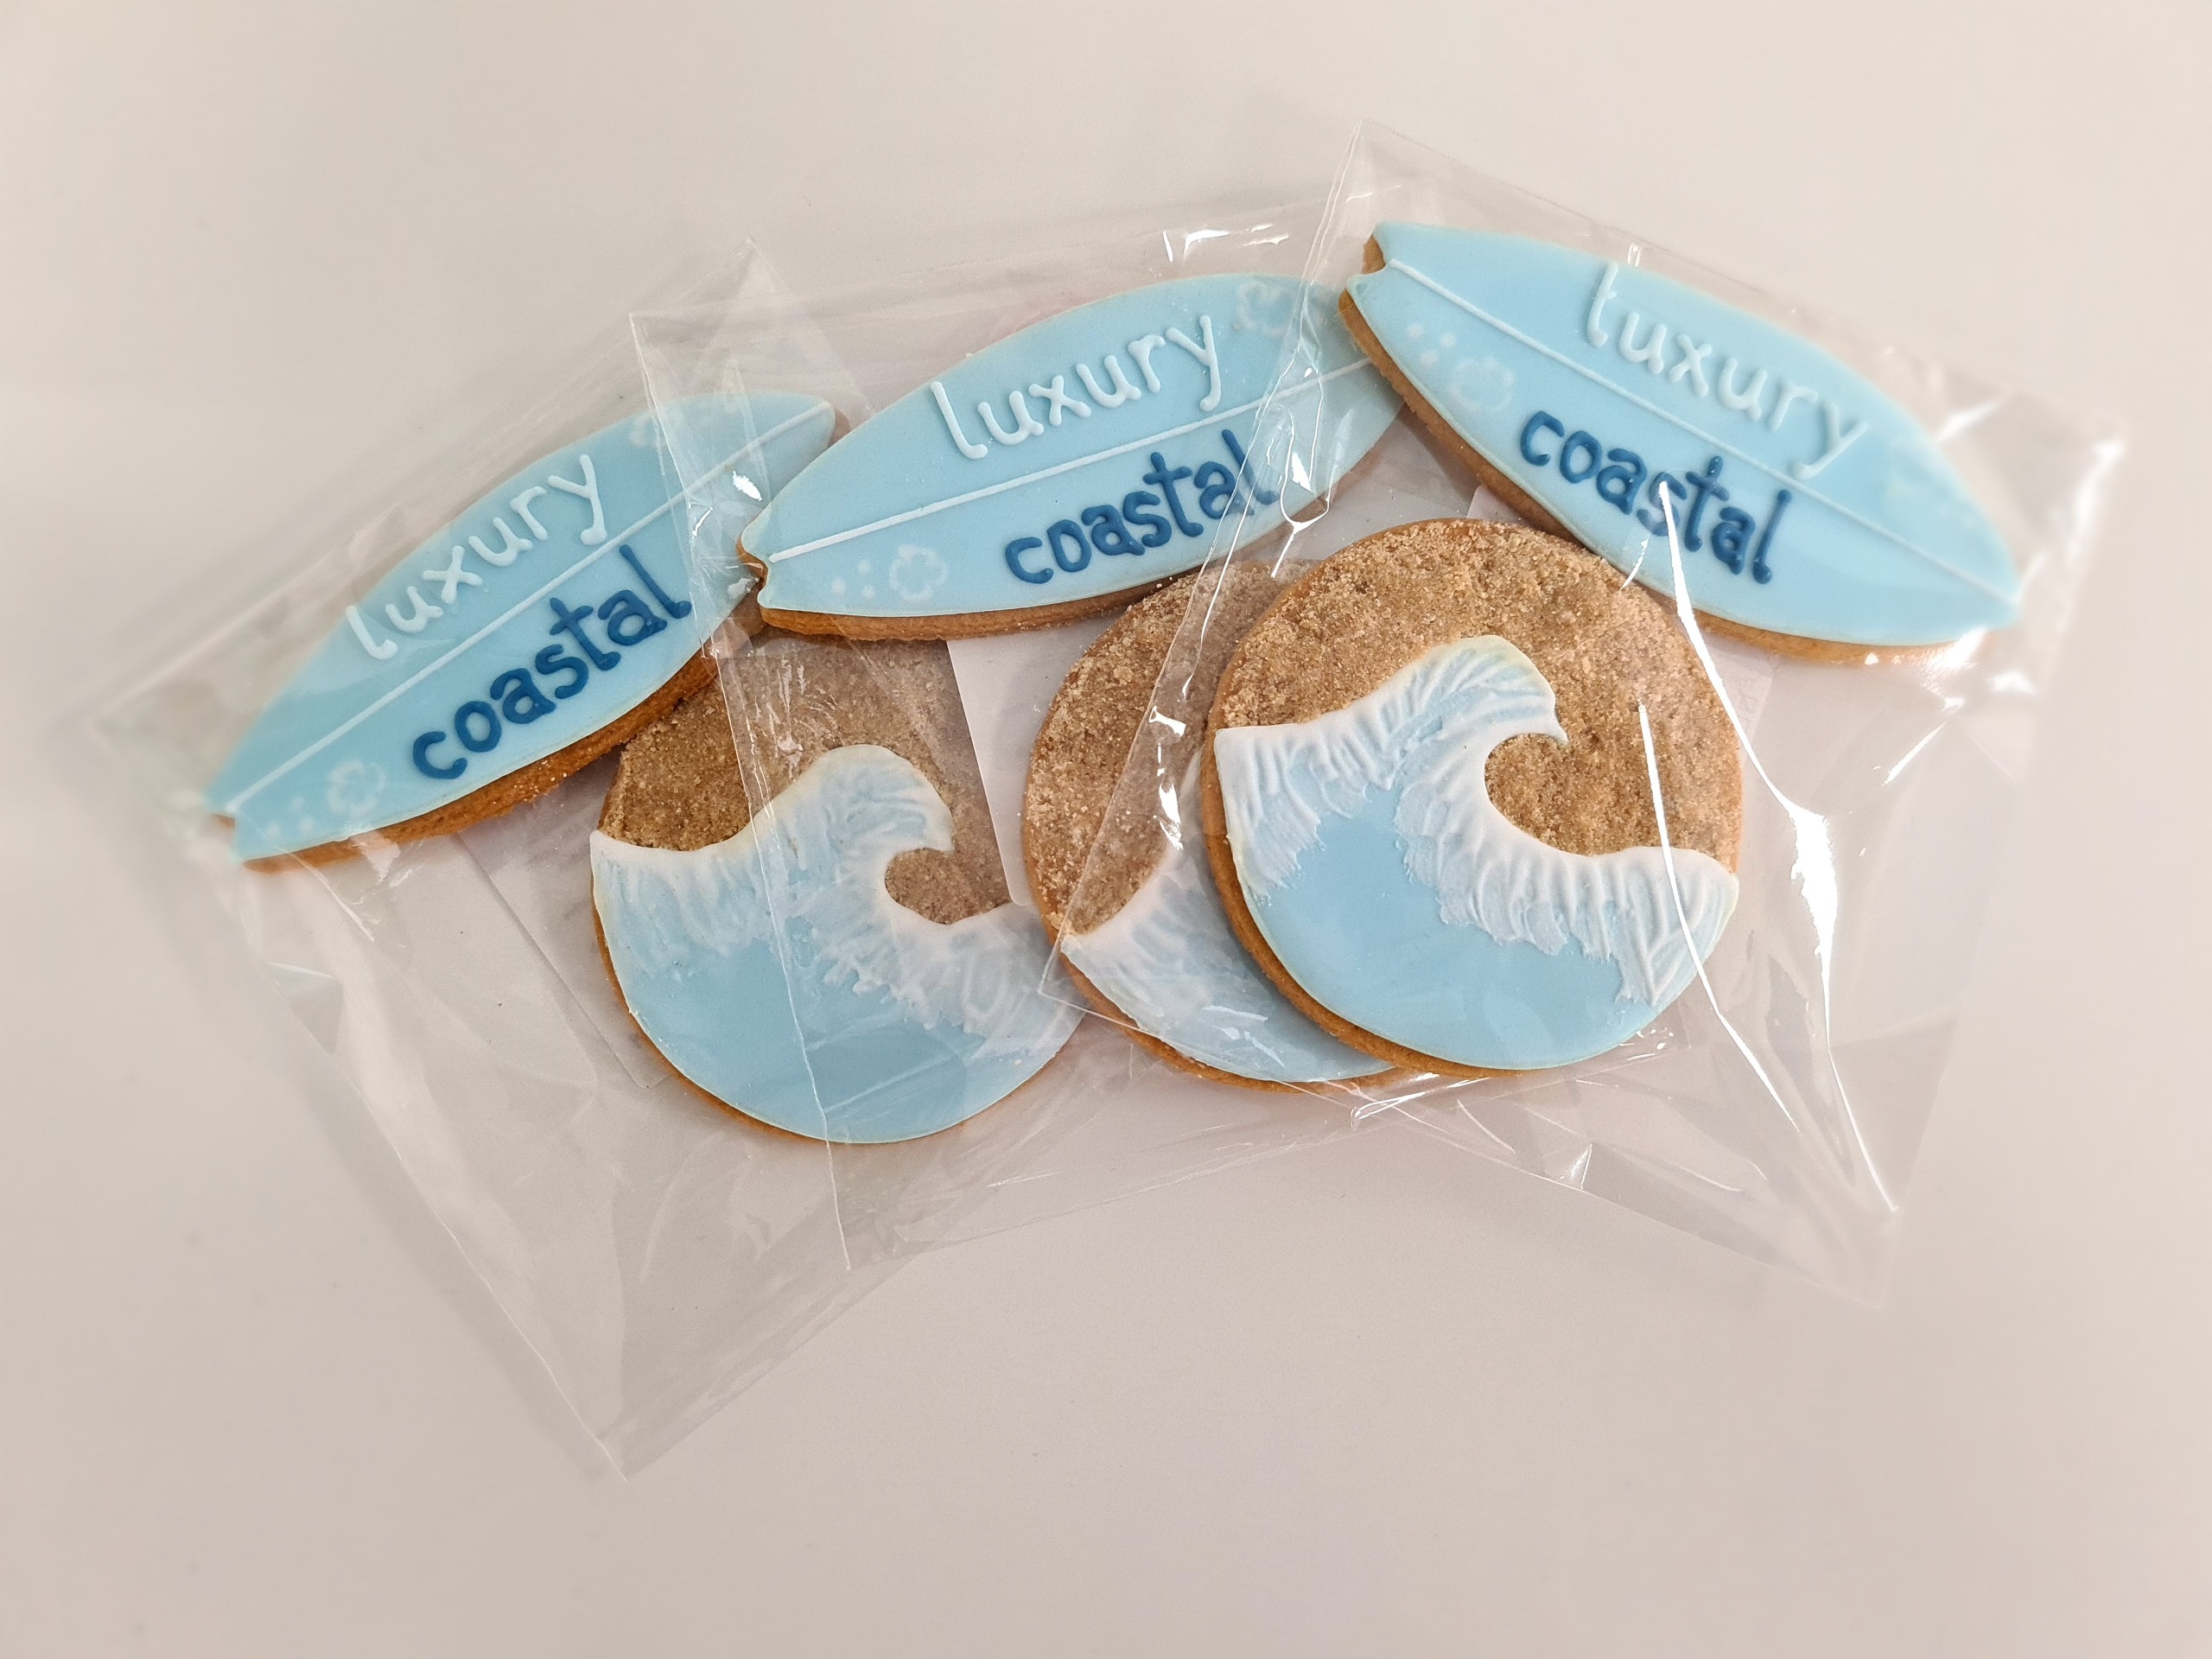 Luxury Coastal team biscuits